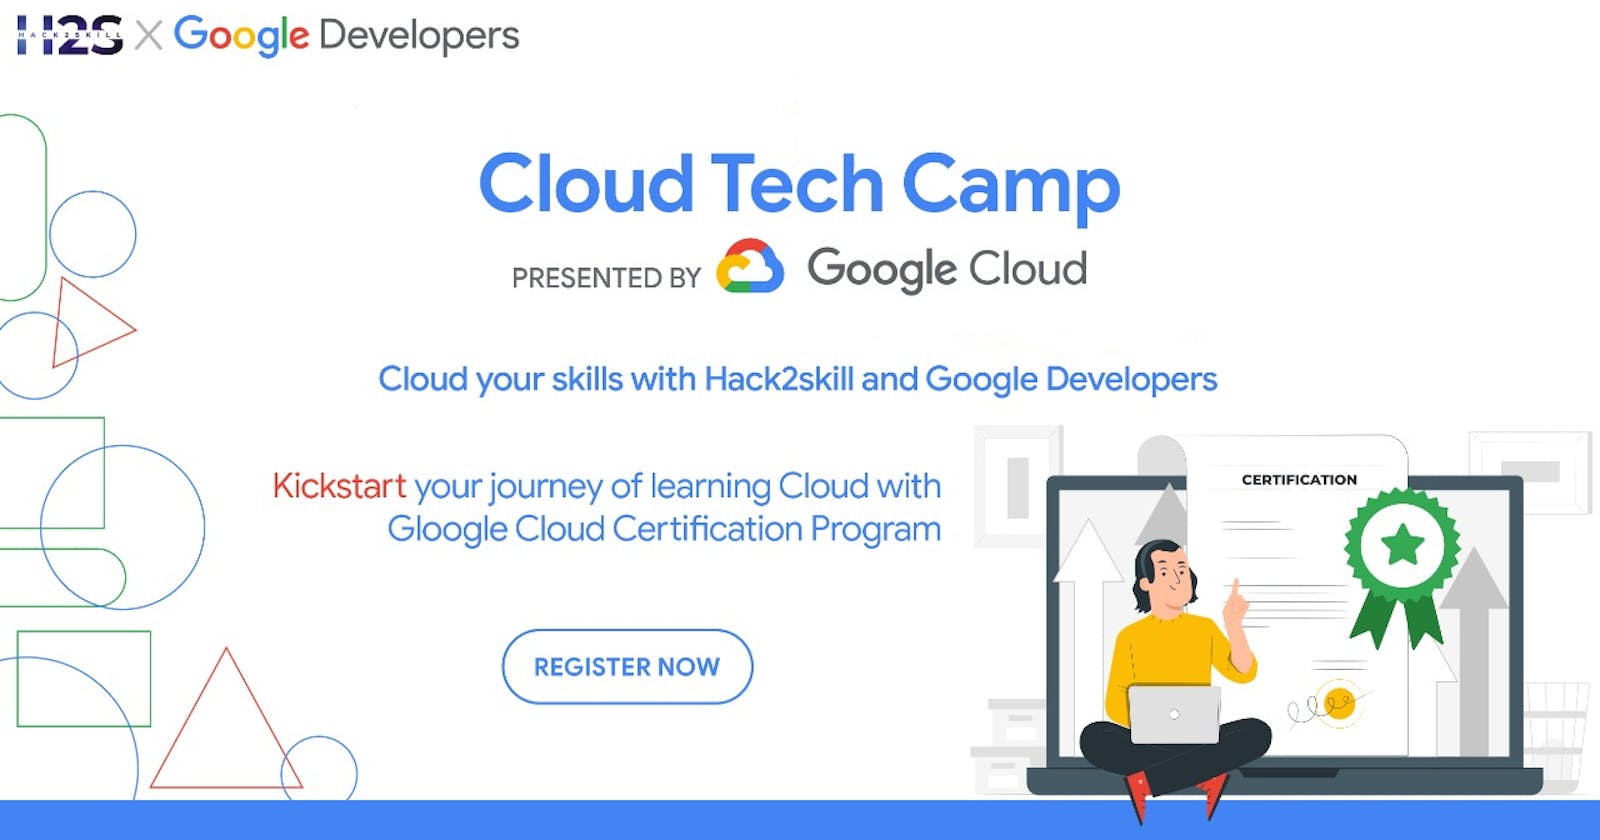 Cloud Tech Camp Presented By Google Cloud